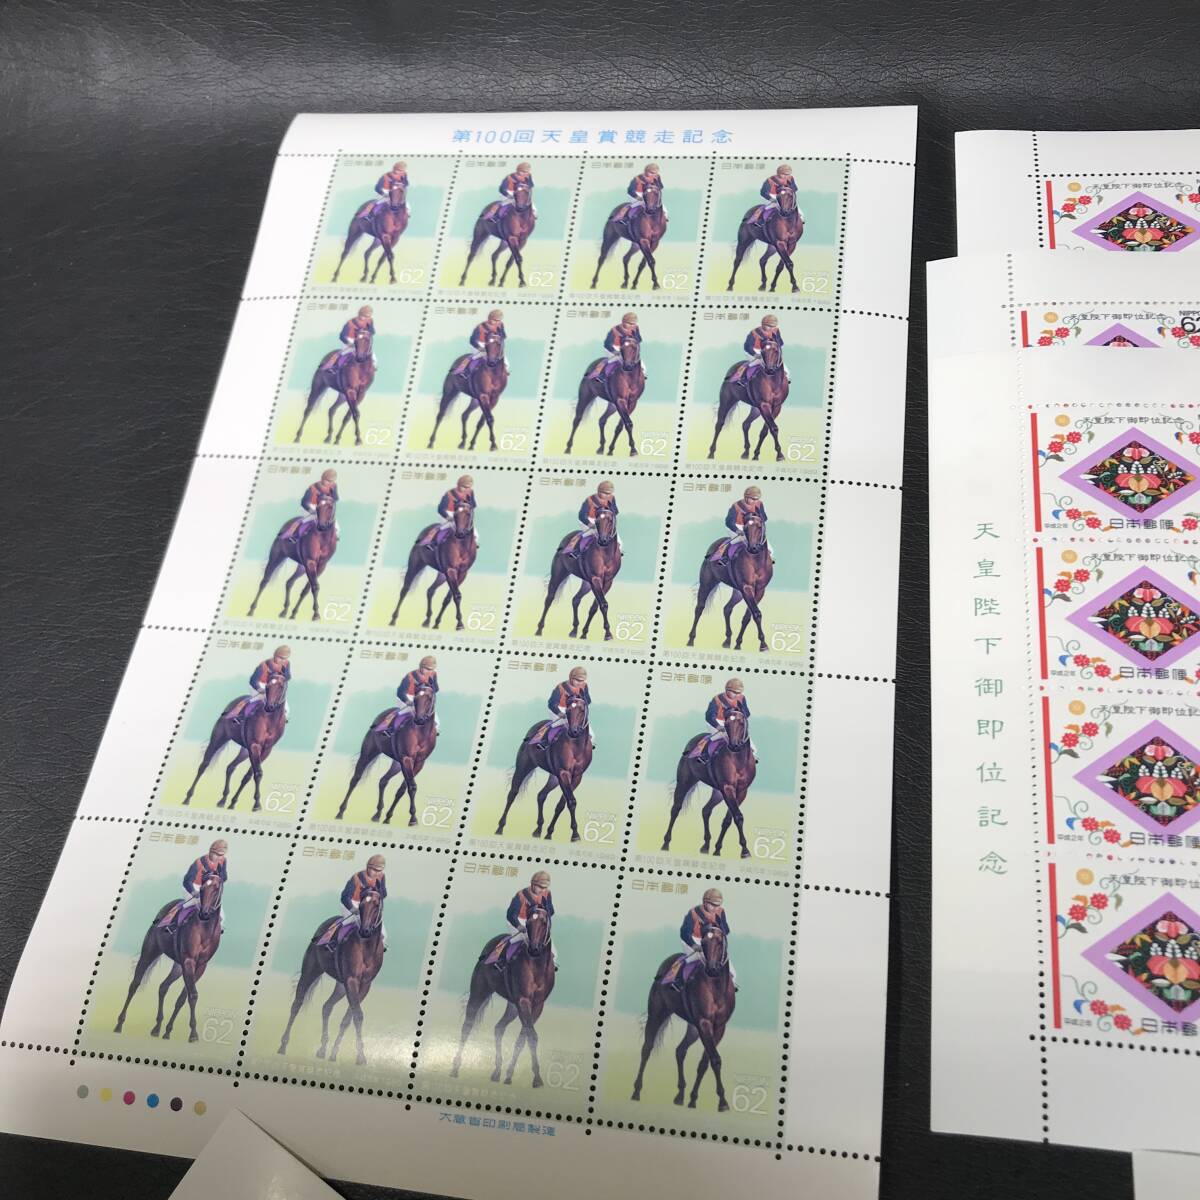 TG11 天皇 皇太子様 記念切手 まとめて 額面21034円分 未使用の画像2